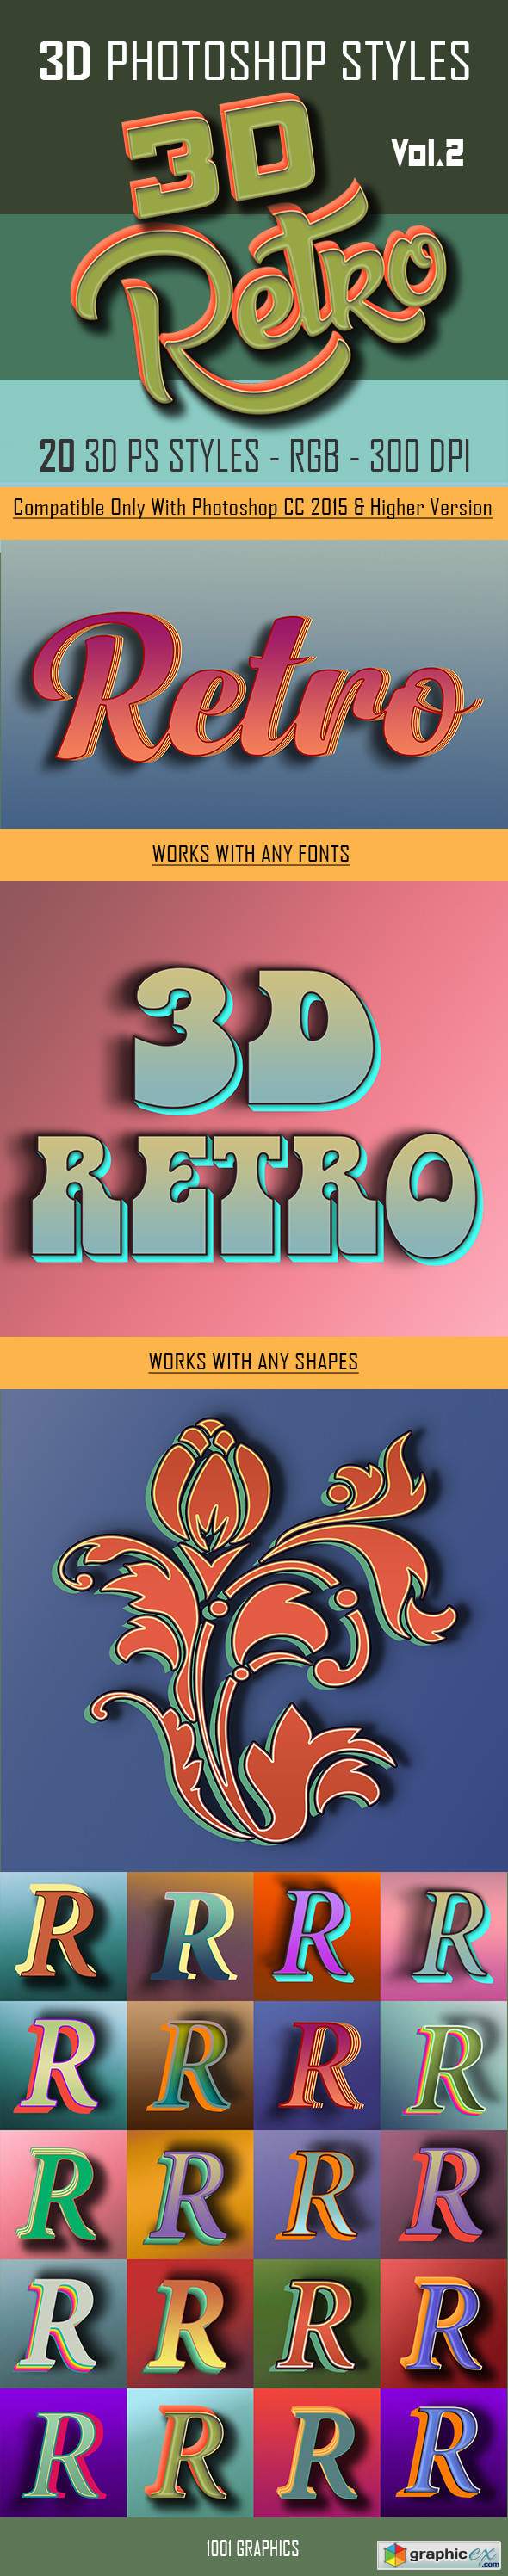 20 3D Retro Photoshop Styles asl Vol.2